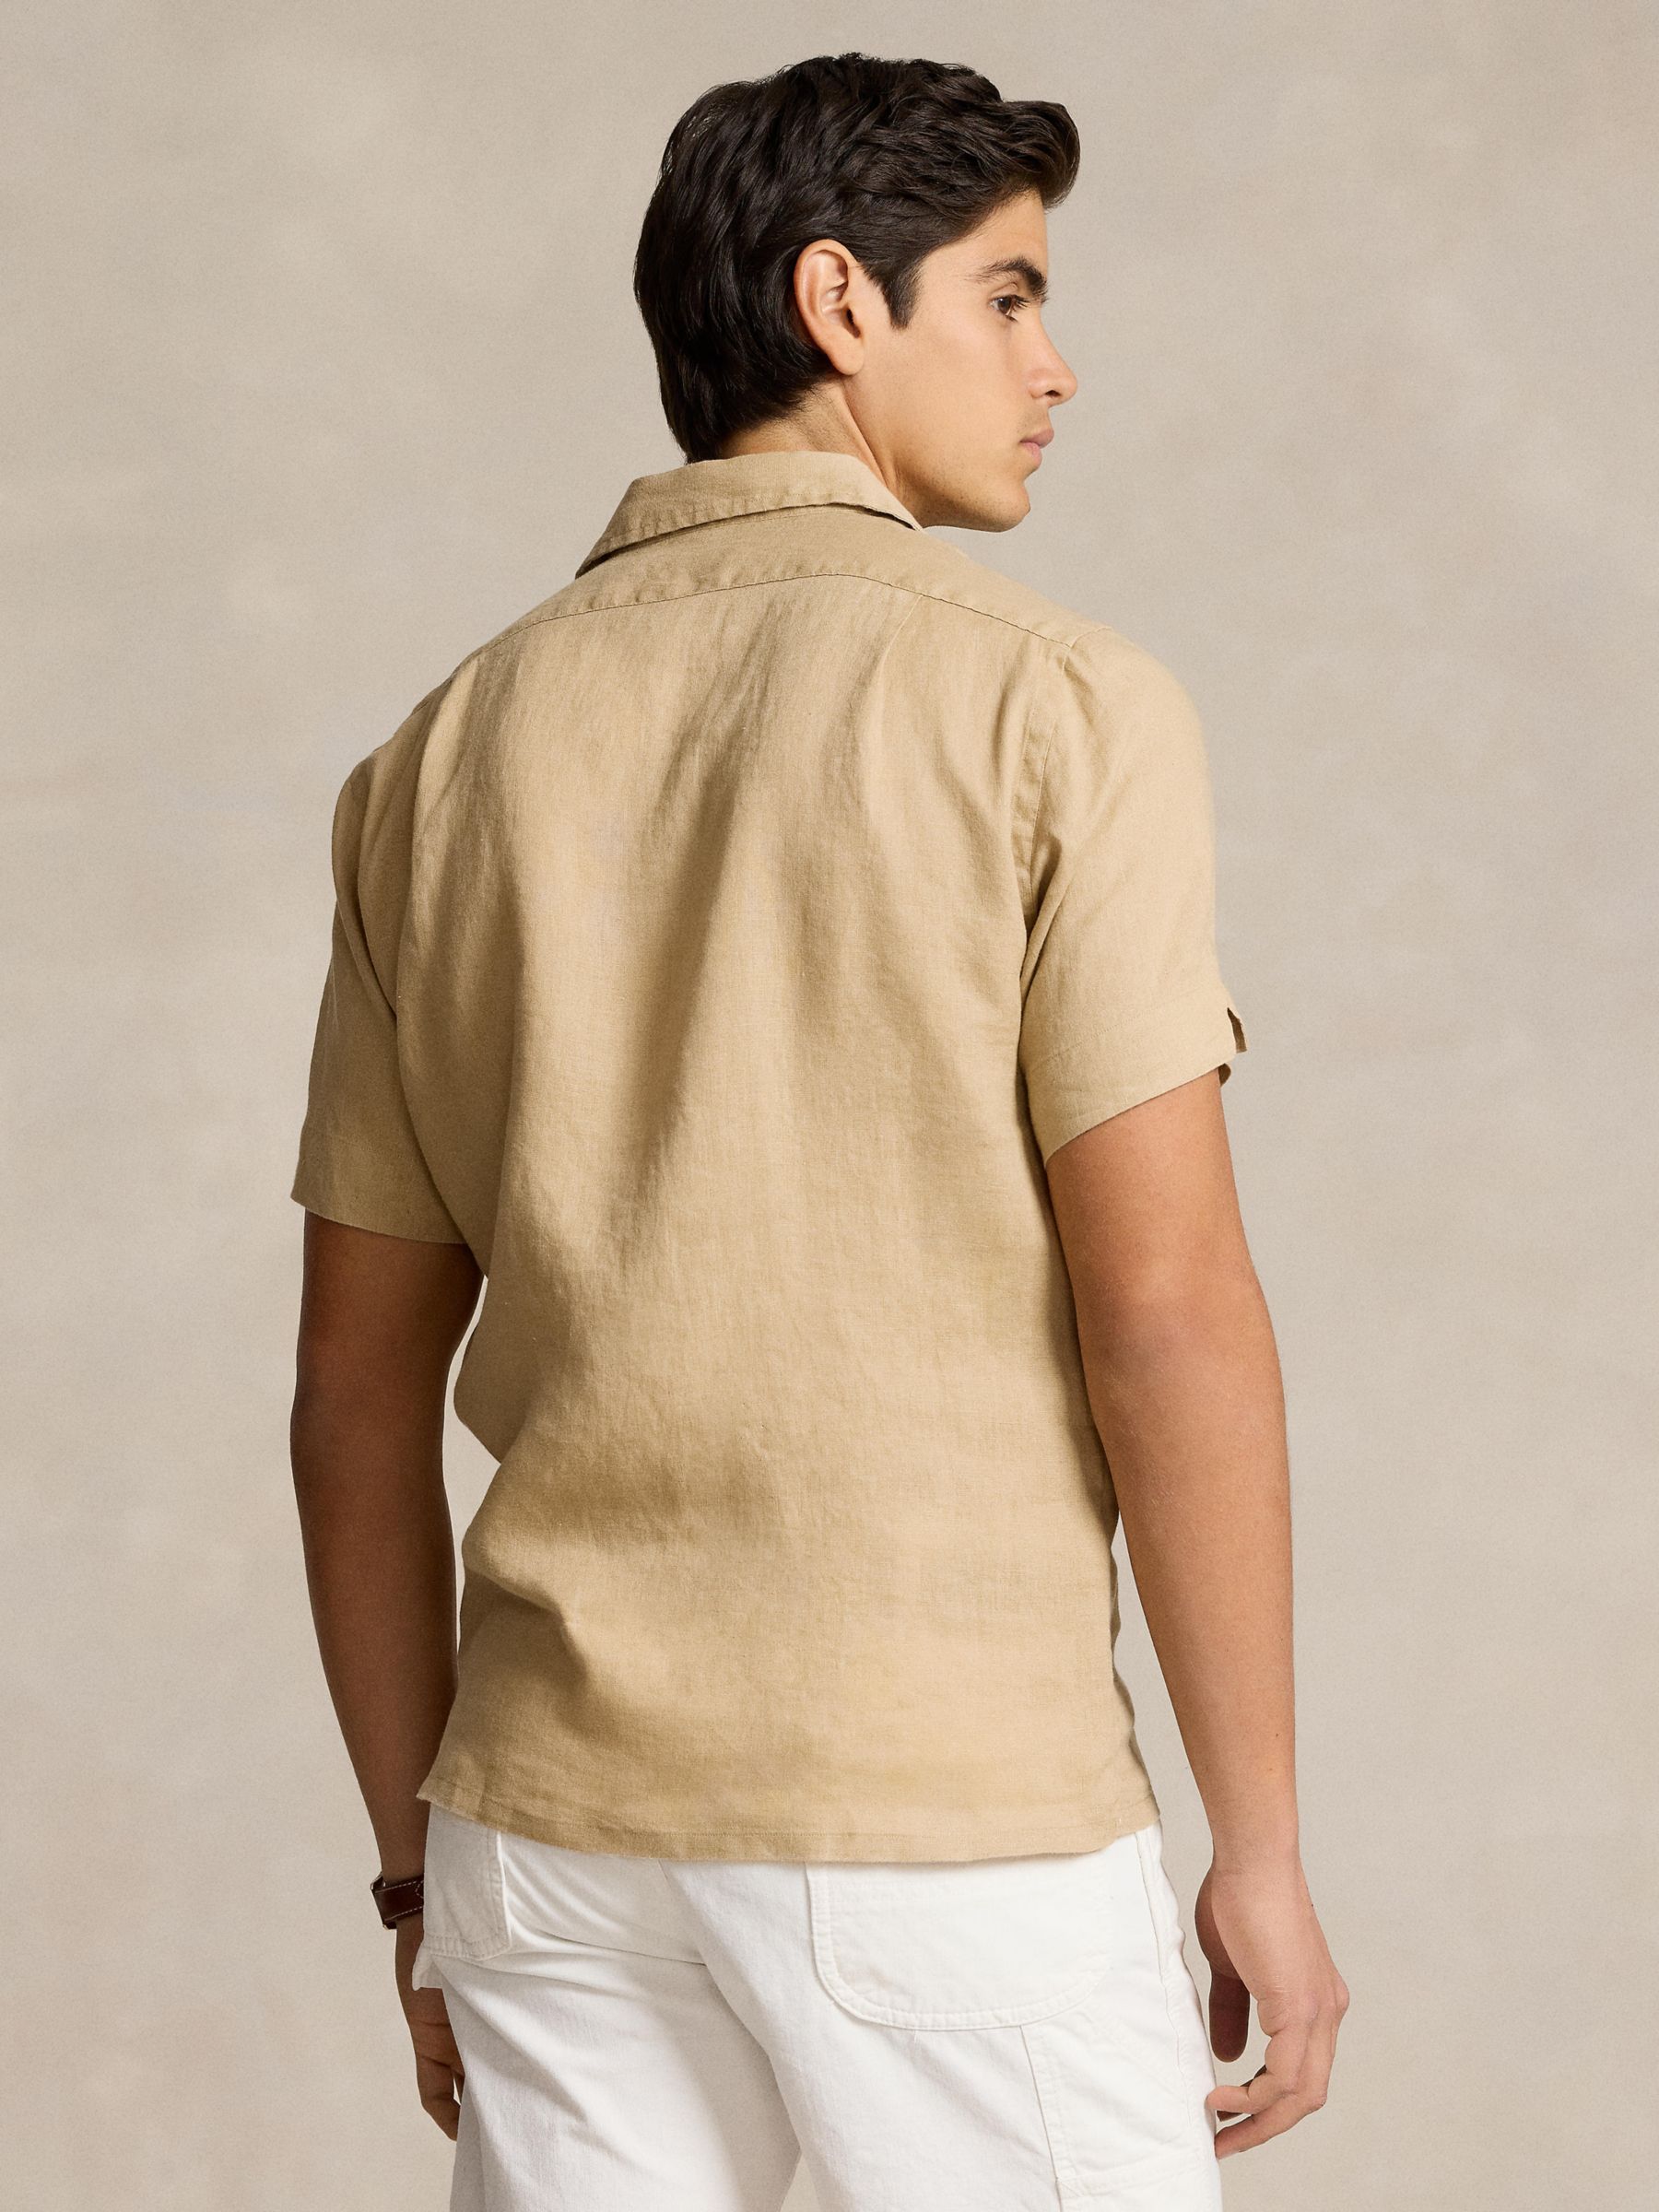 Polo Ralph Lauren Linen Shirt, Vintage Khaki, M